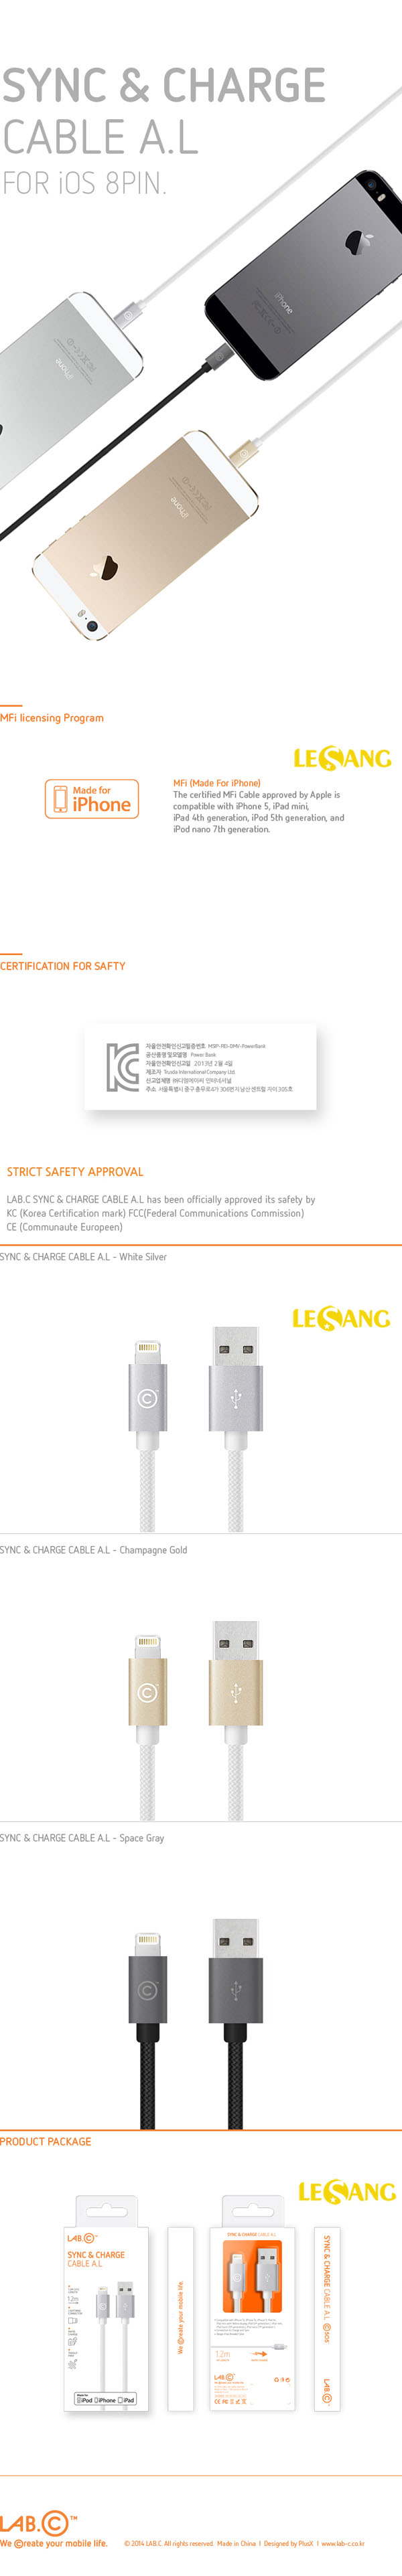 Cáp Lightning iphone, ipad, ipad LAB-C 1,2m (Korea) 326